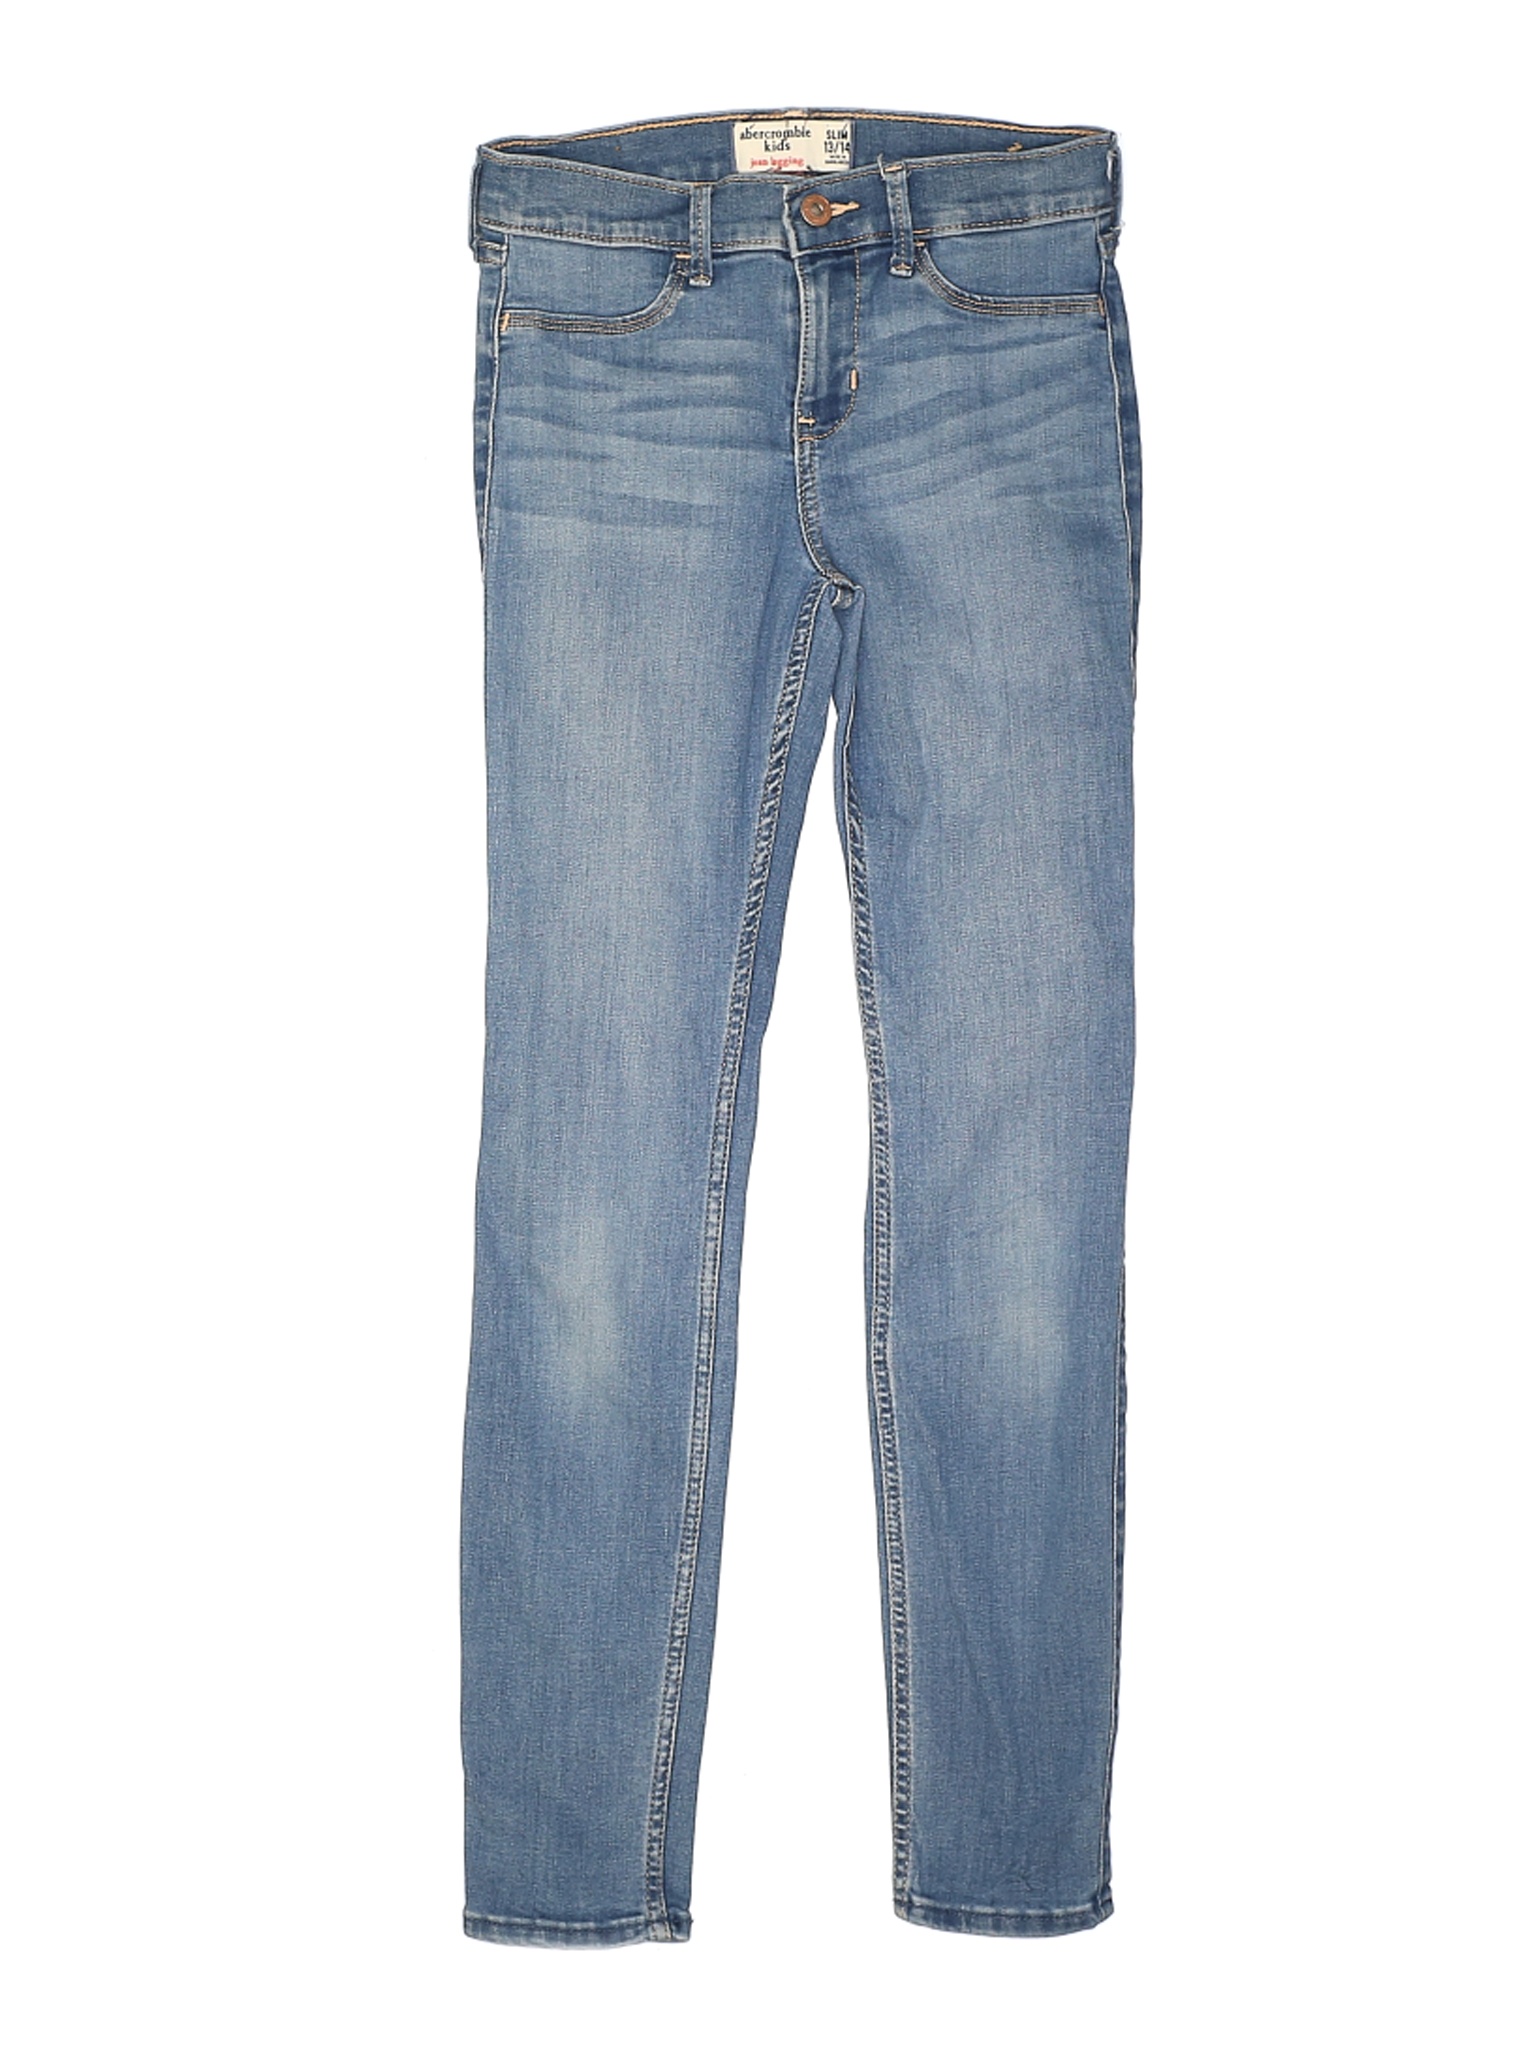 Abercrombie & Fitch Girls Blue Jeans 13 | eBay